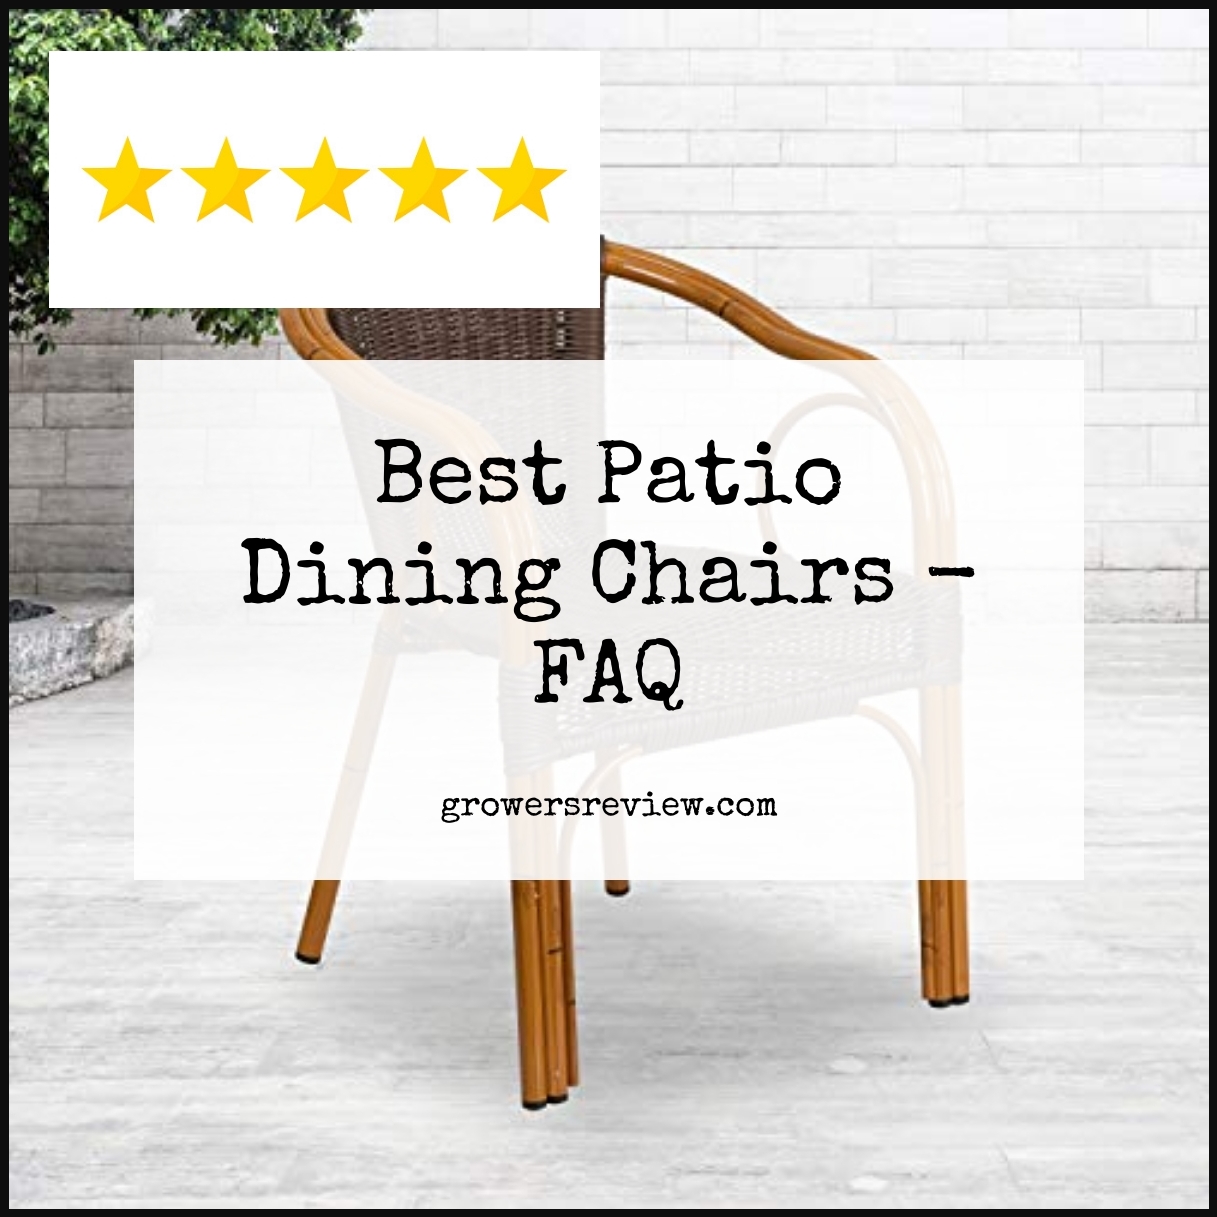 Best Patio Dining Chairs - FAQ